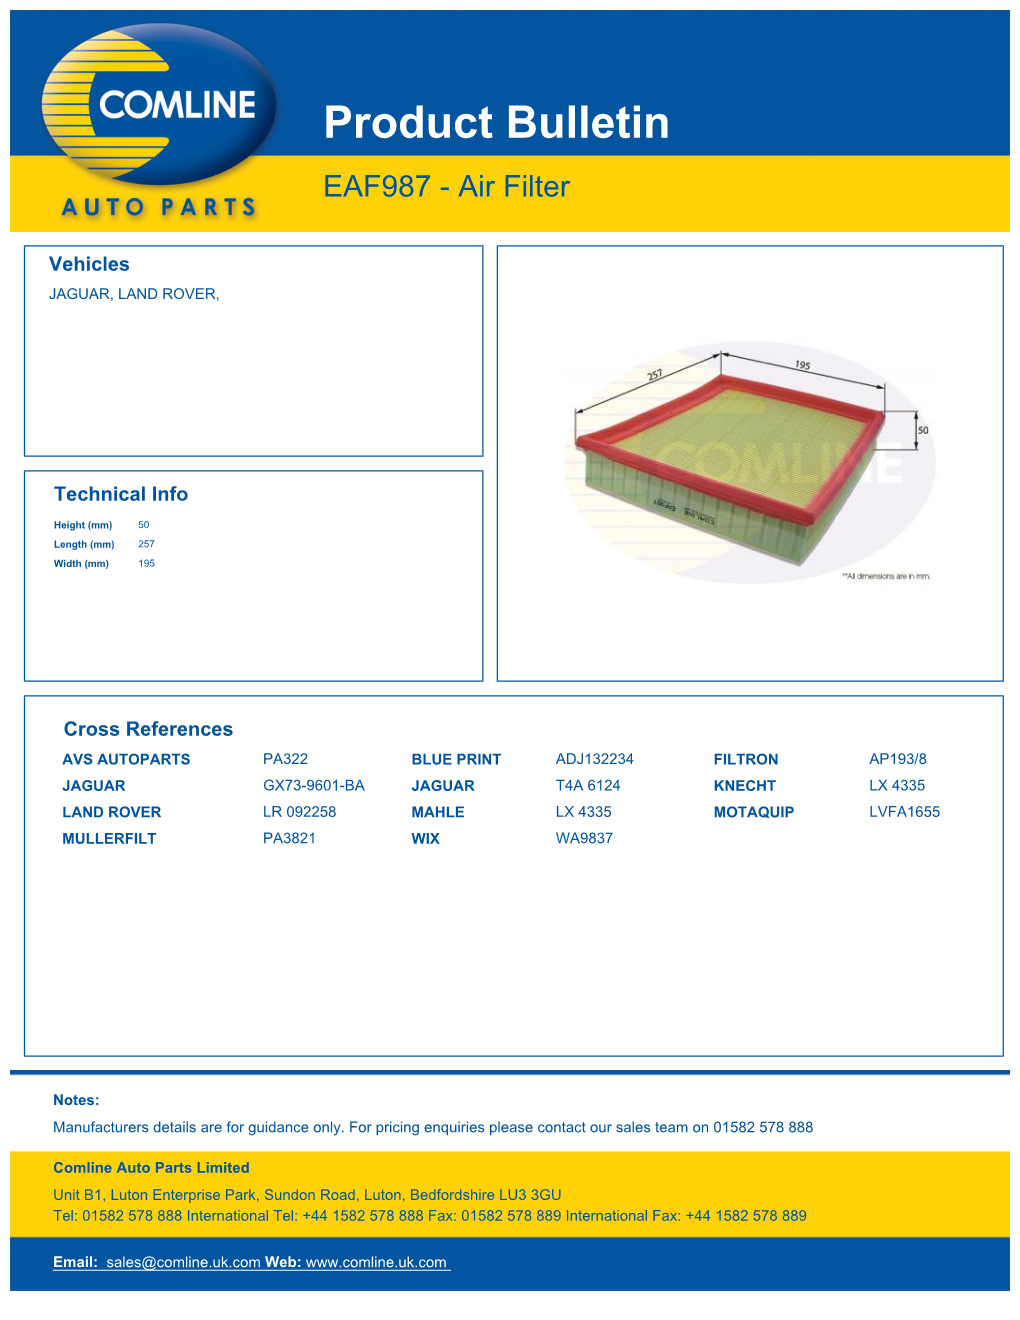 Product Bulletin EAF987 - Air Filter